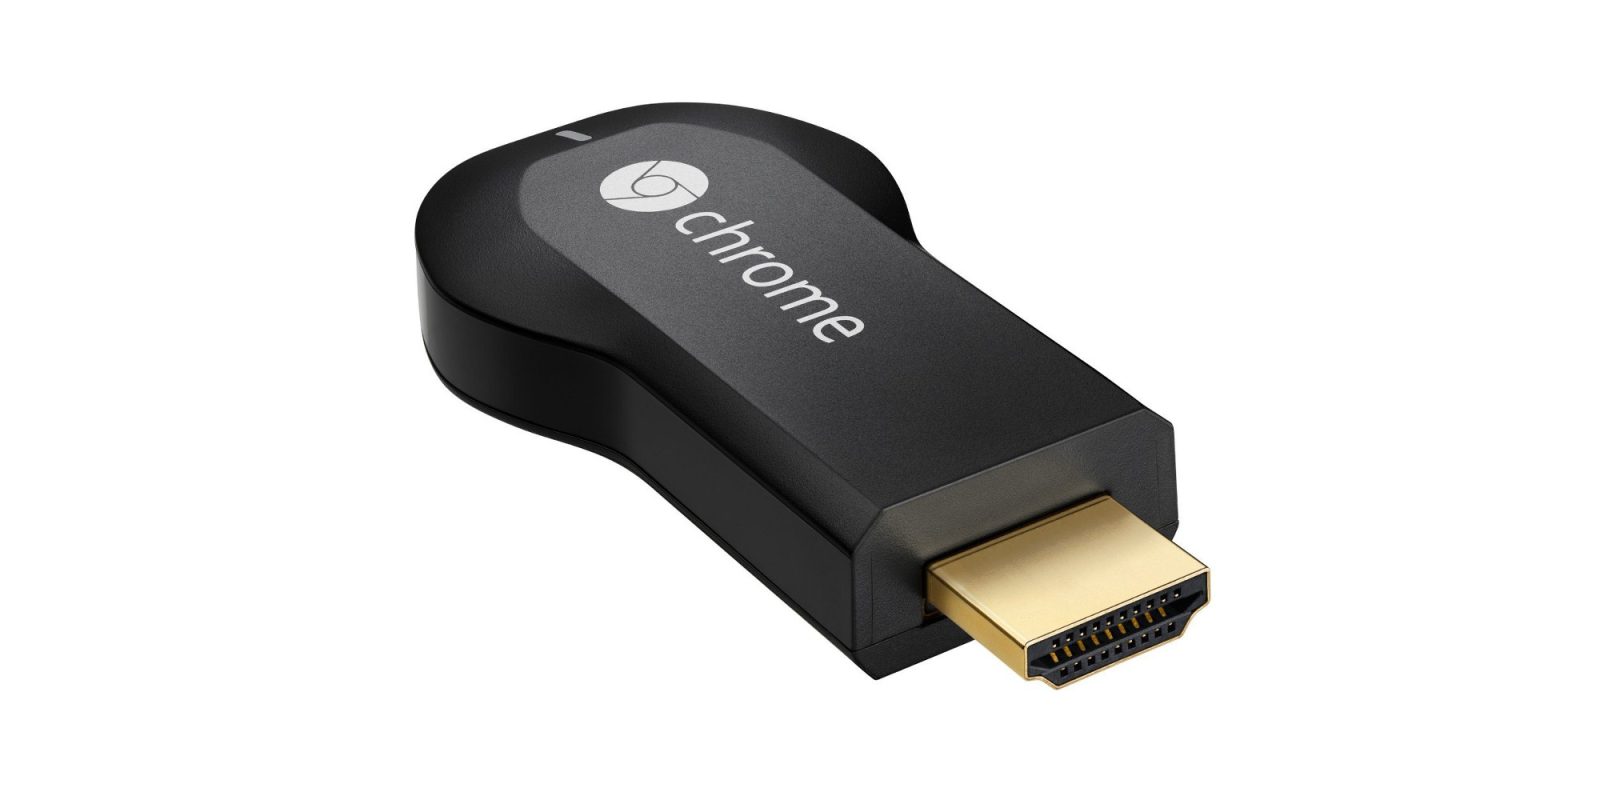 Original Chromecast not receiving major updates, only fixes -